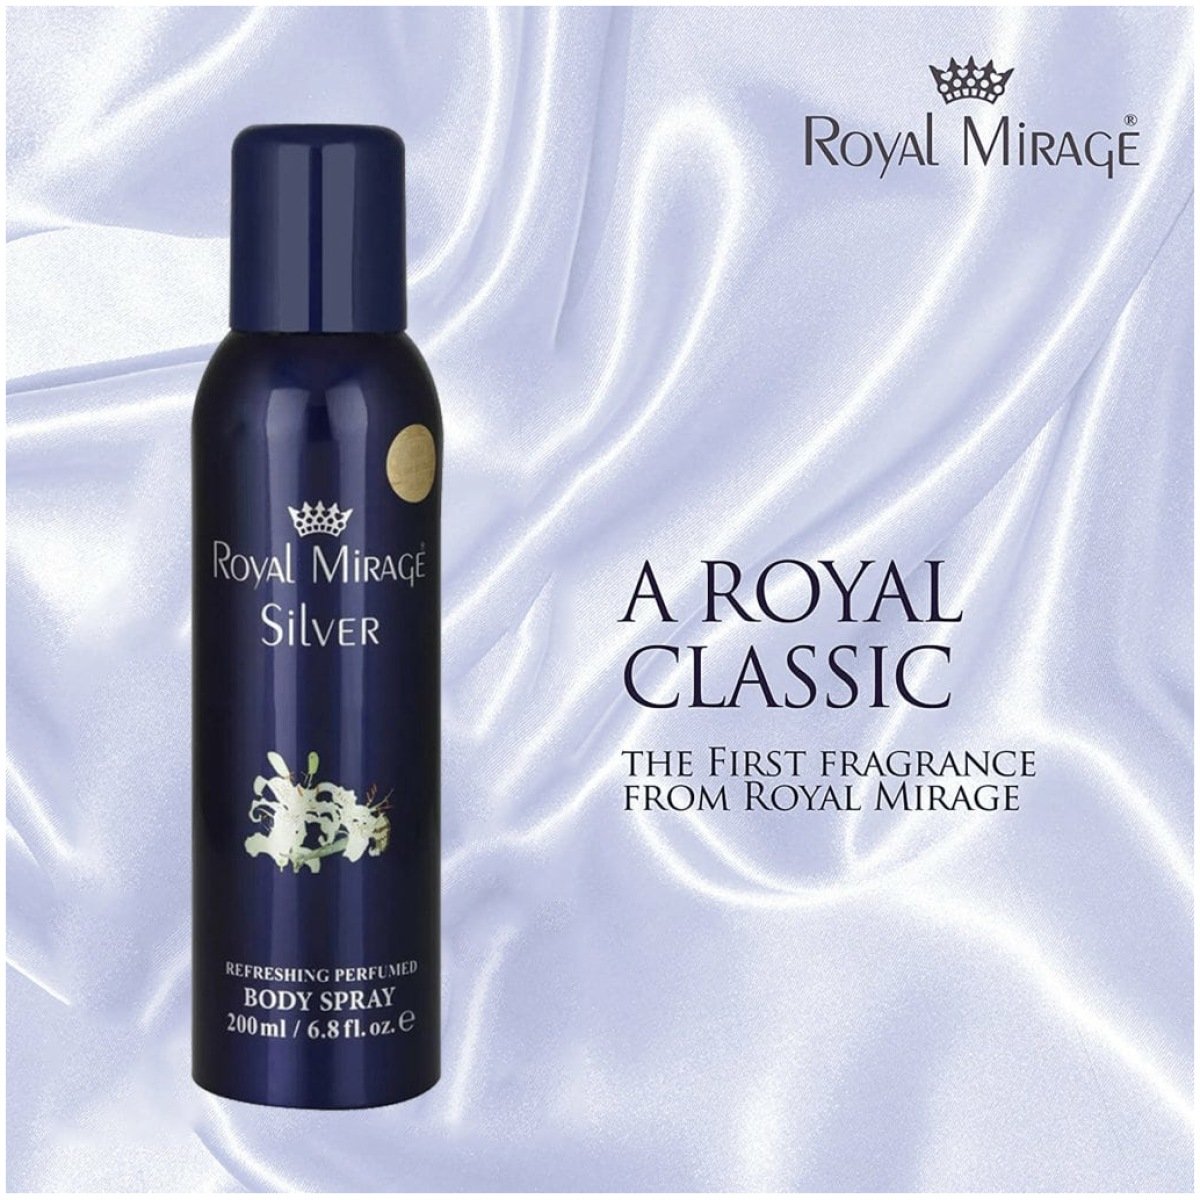 Royal Mirage Silver Perfumed Body Deodorant Spray 200ml